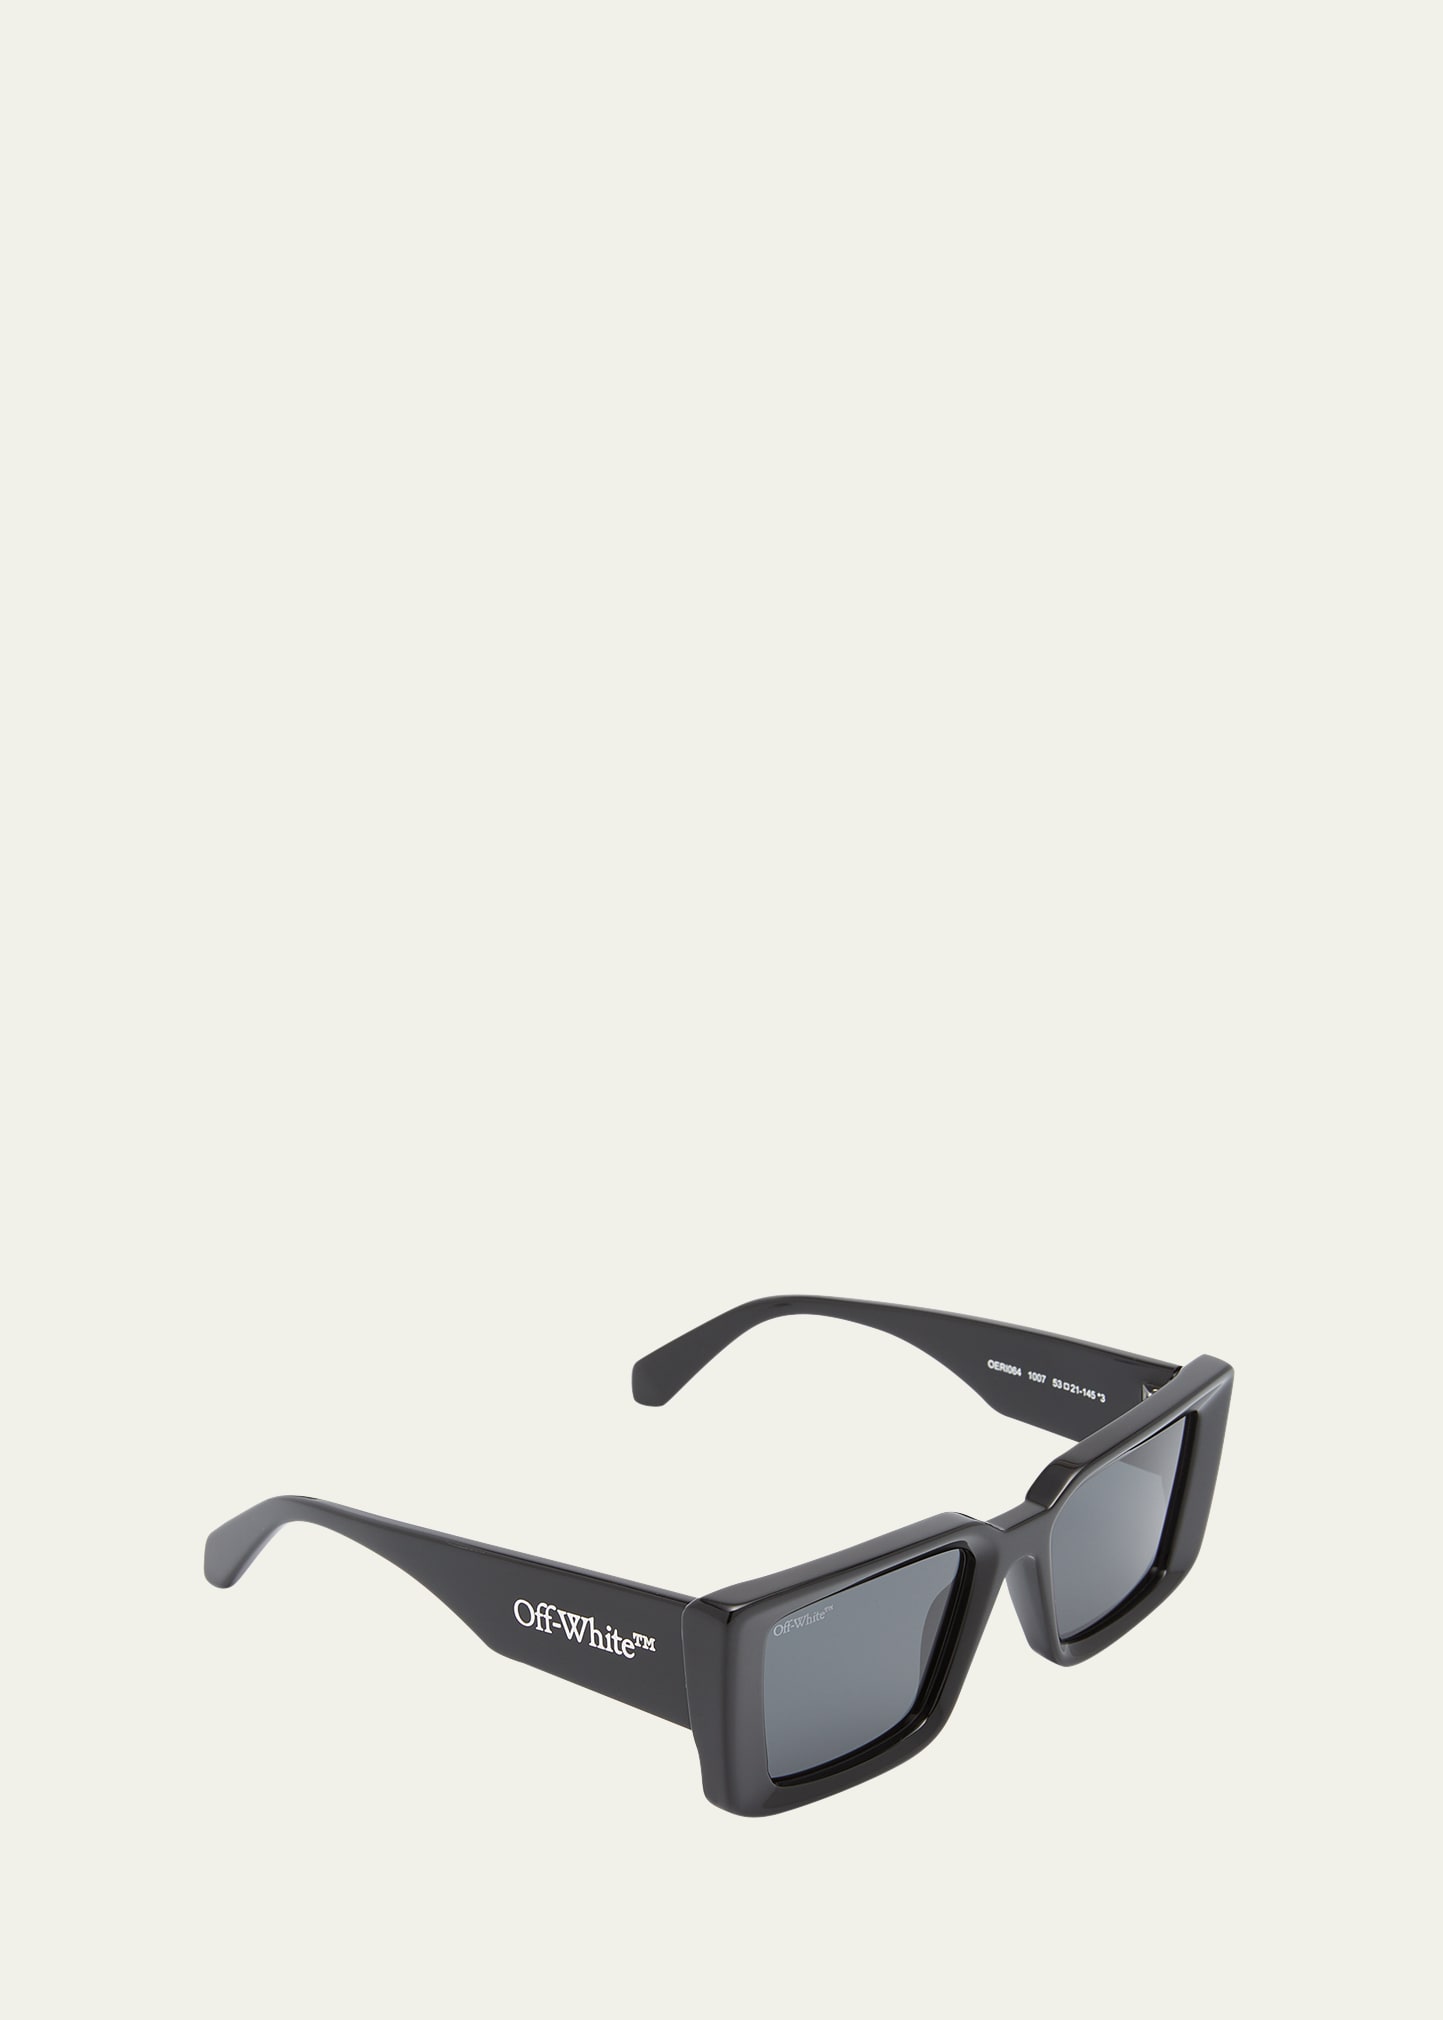 Off-White Francisco OERI048 1007 50 Sunglasses